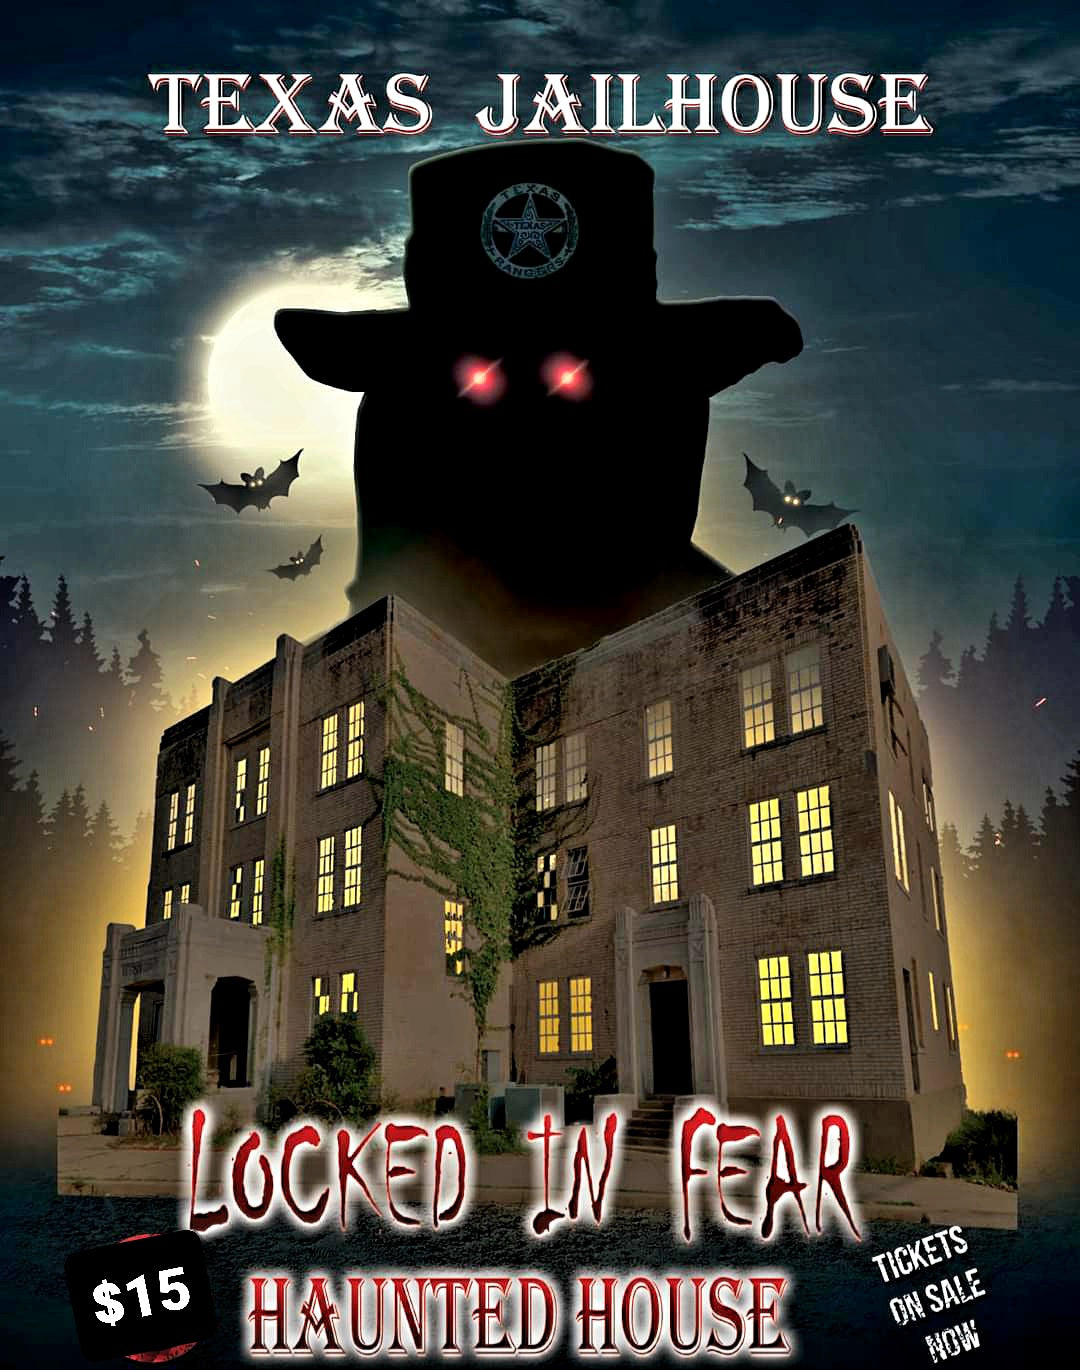 "Locked In Fear" Haunted House